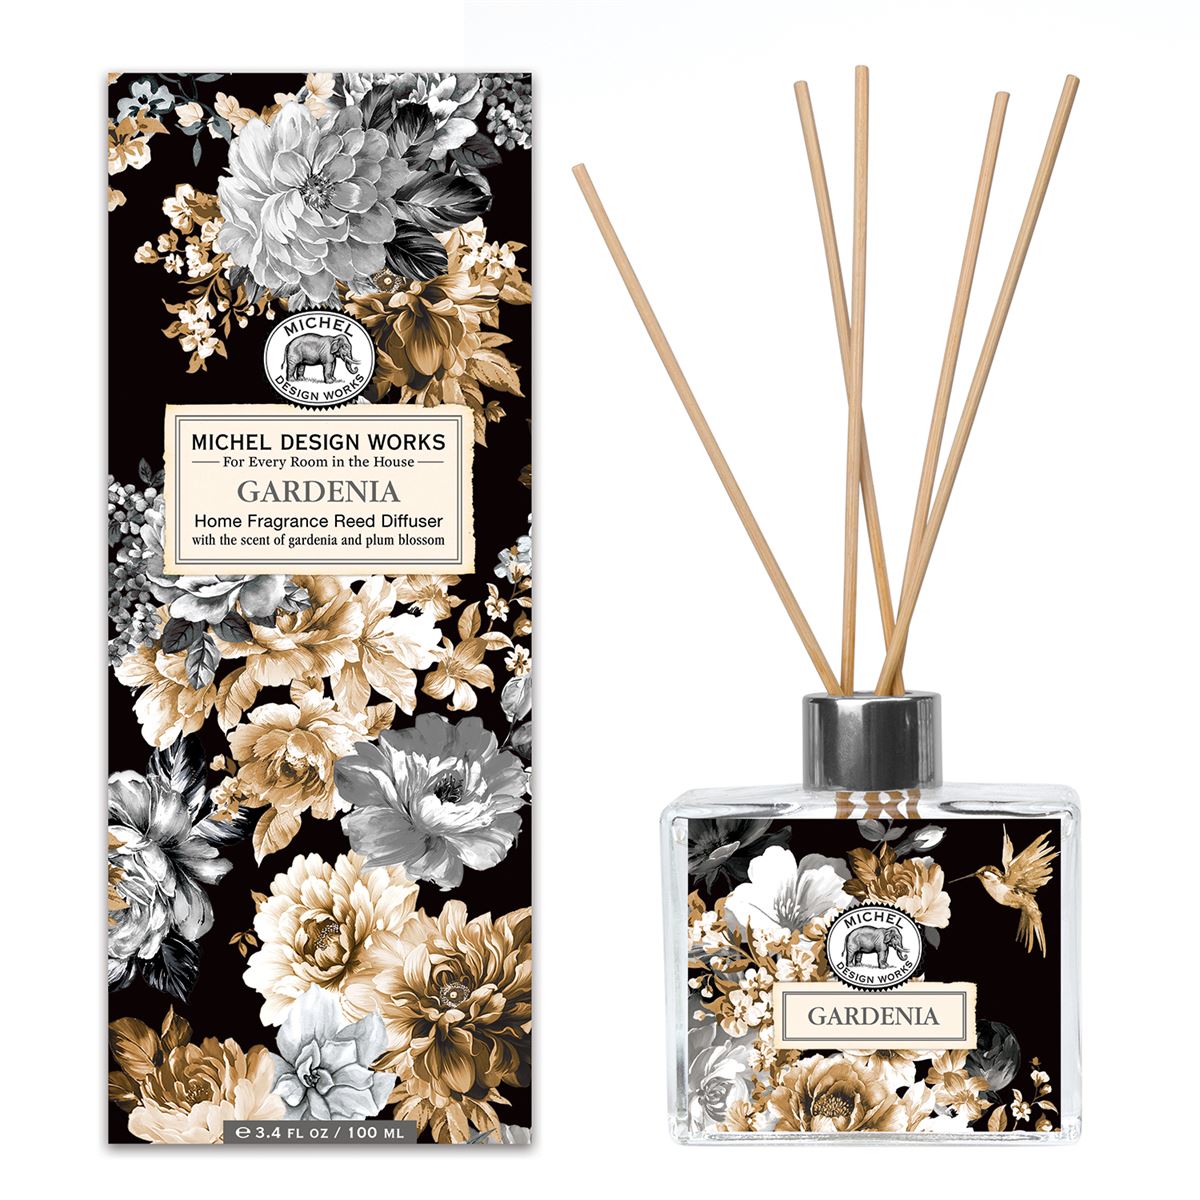 Michel Design Works - Gardenia Home Fragrance Reed Diffuser